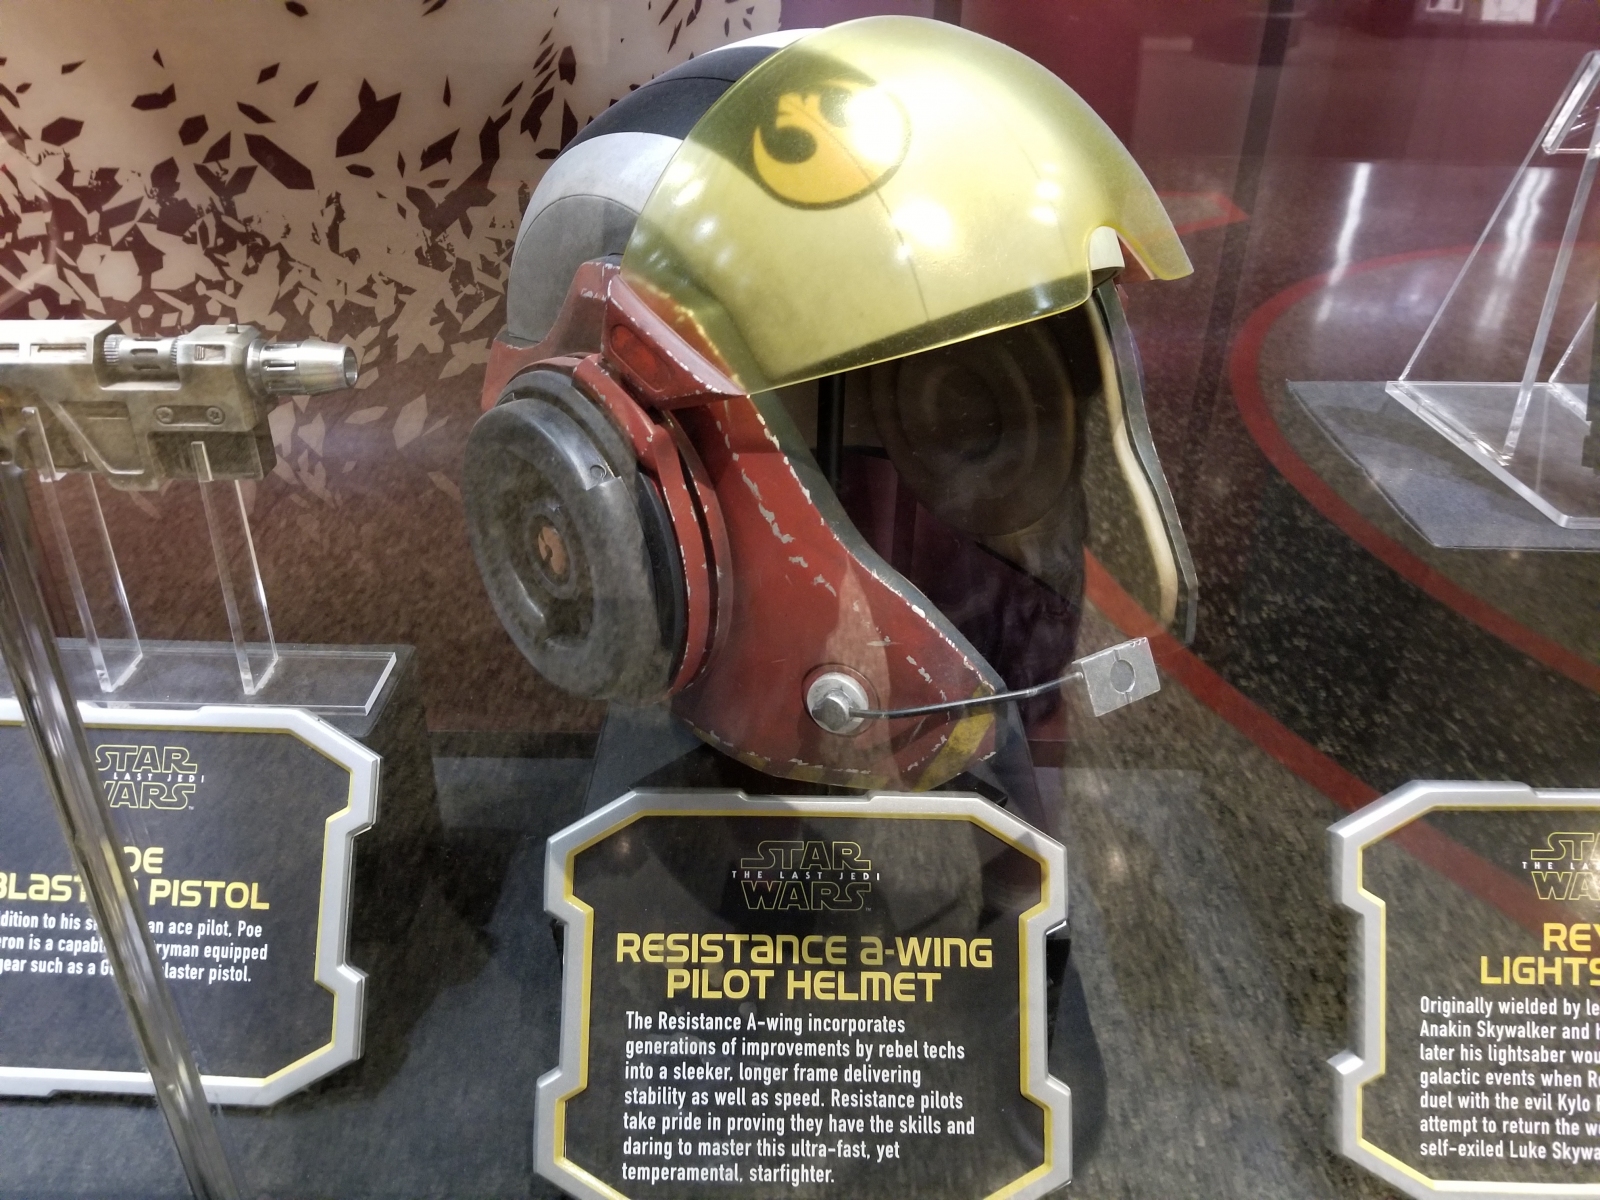 Resistance A-Wing pilot helmet